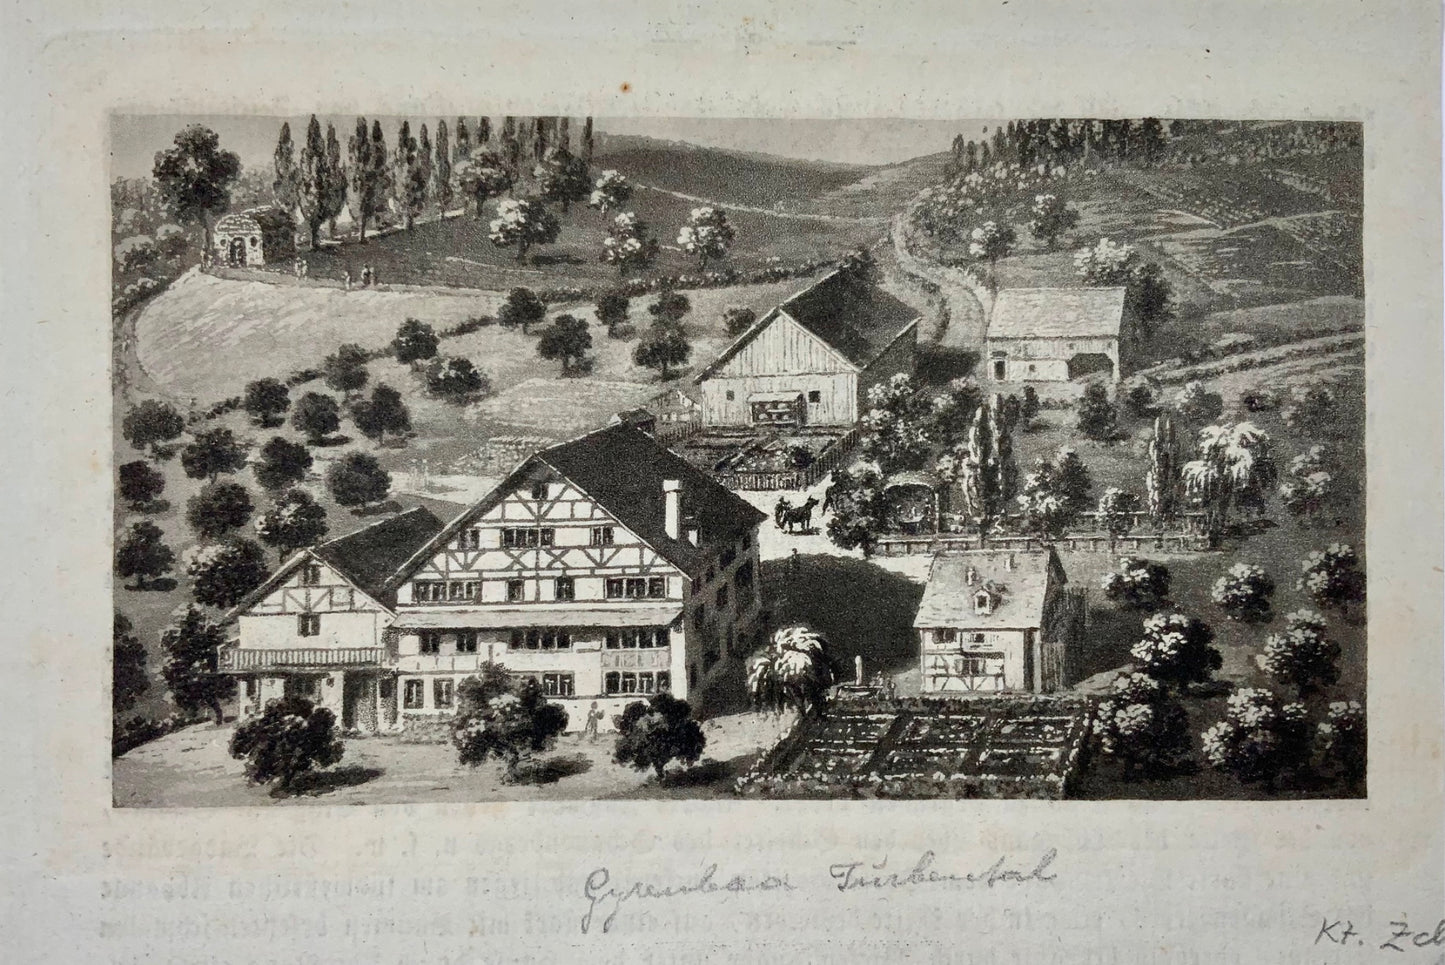 1826 Girenbad, Turbental, Zurich, Suisse, aquatinte fine